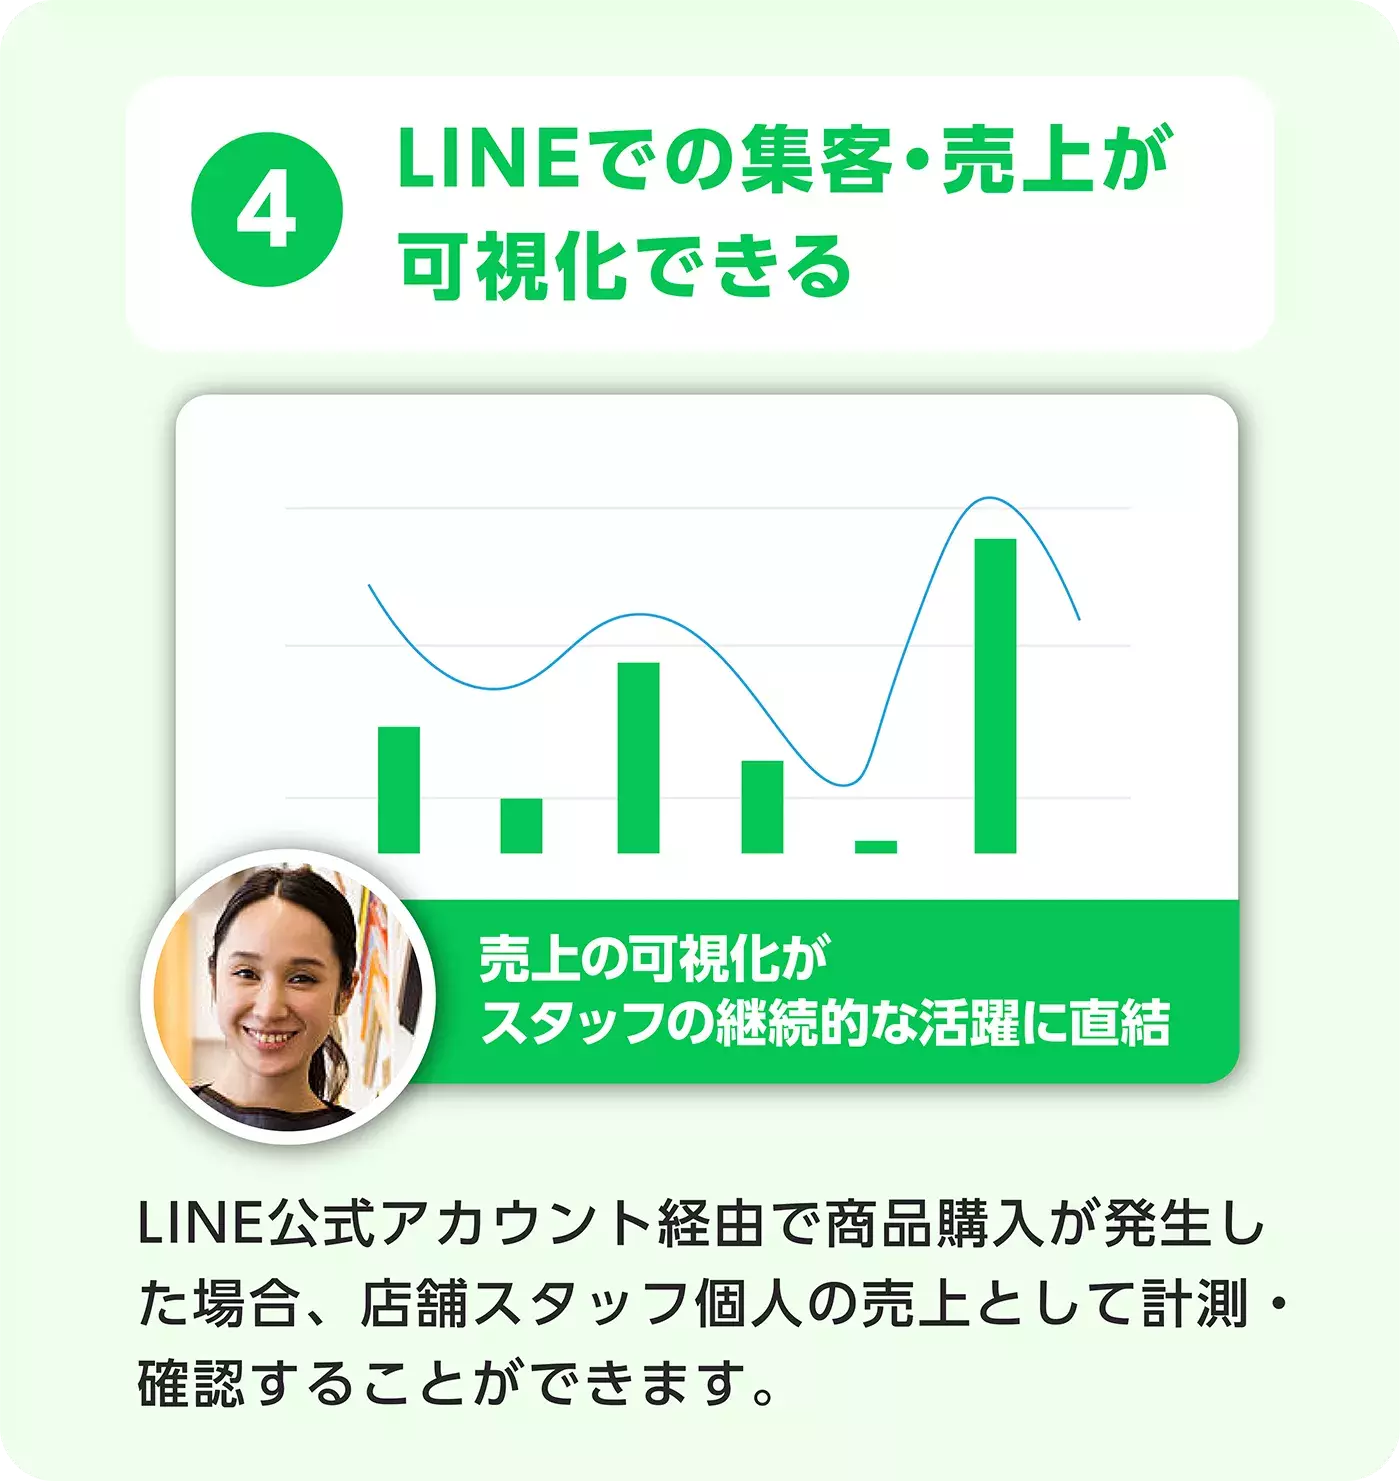 LINEでの接客・売上げが可視化できる